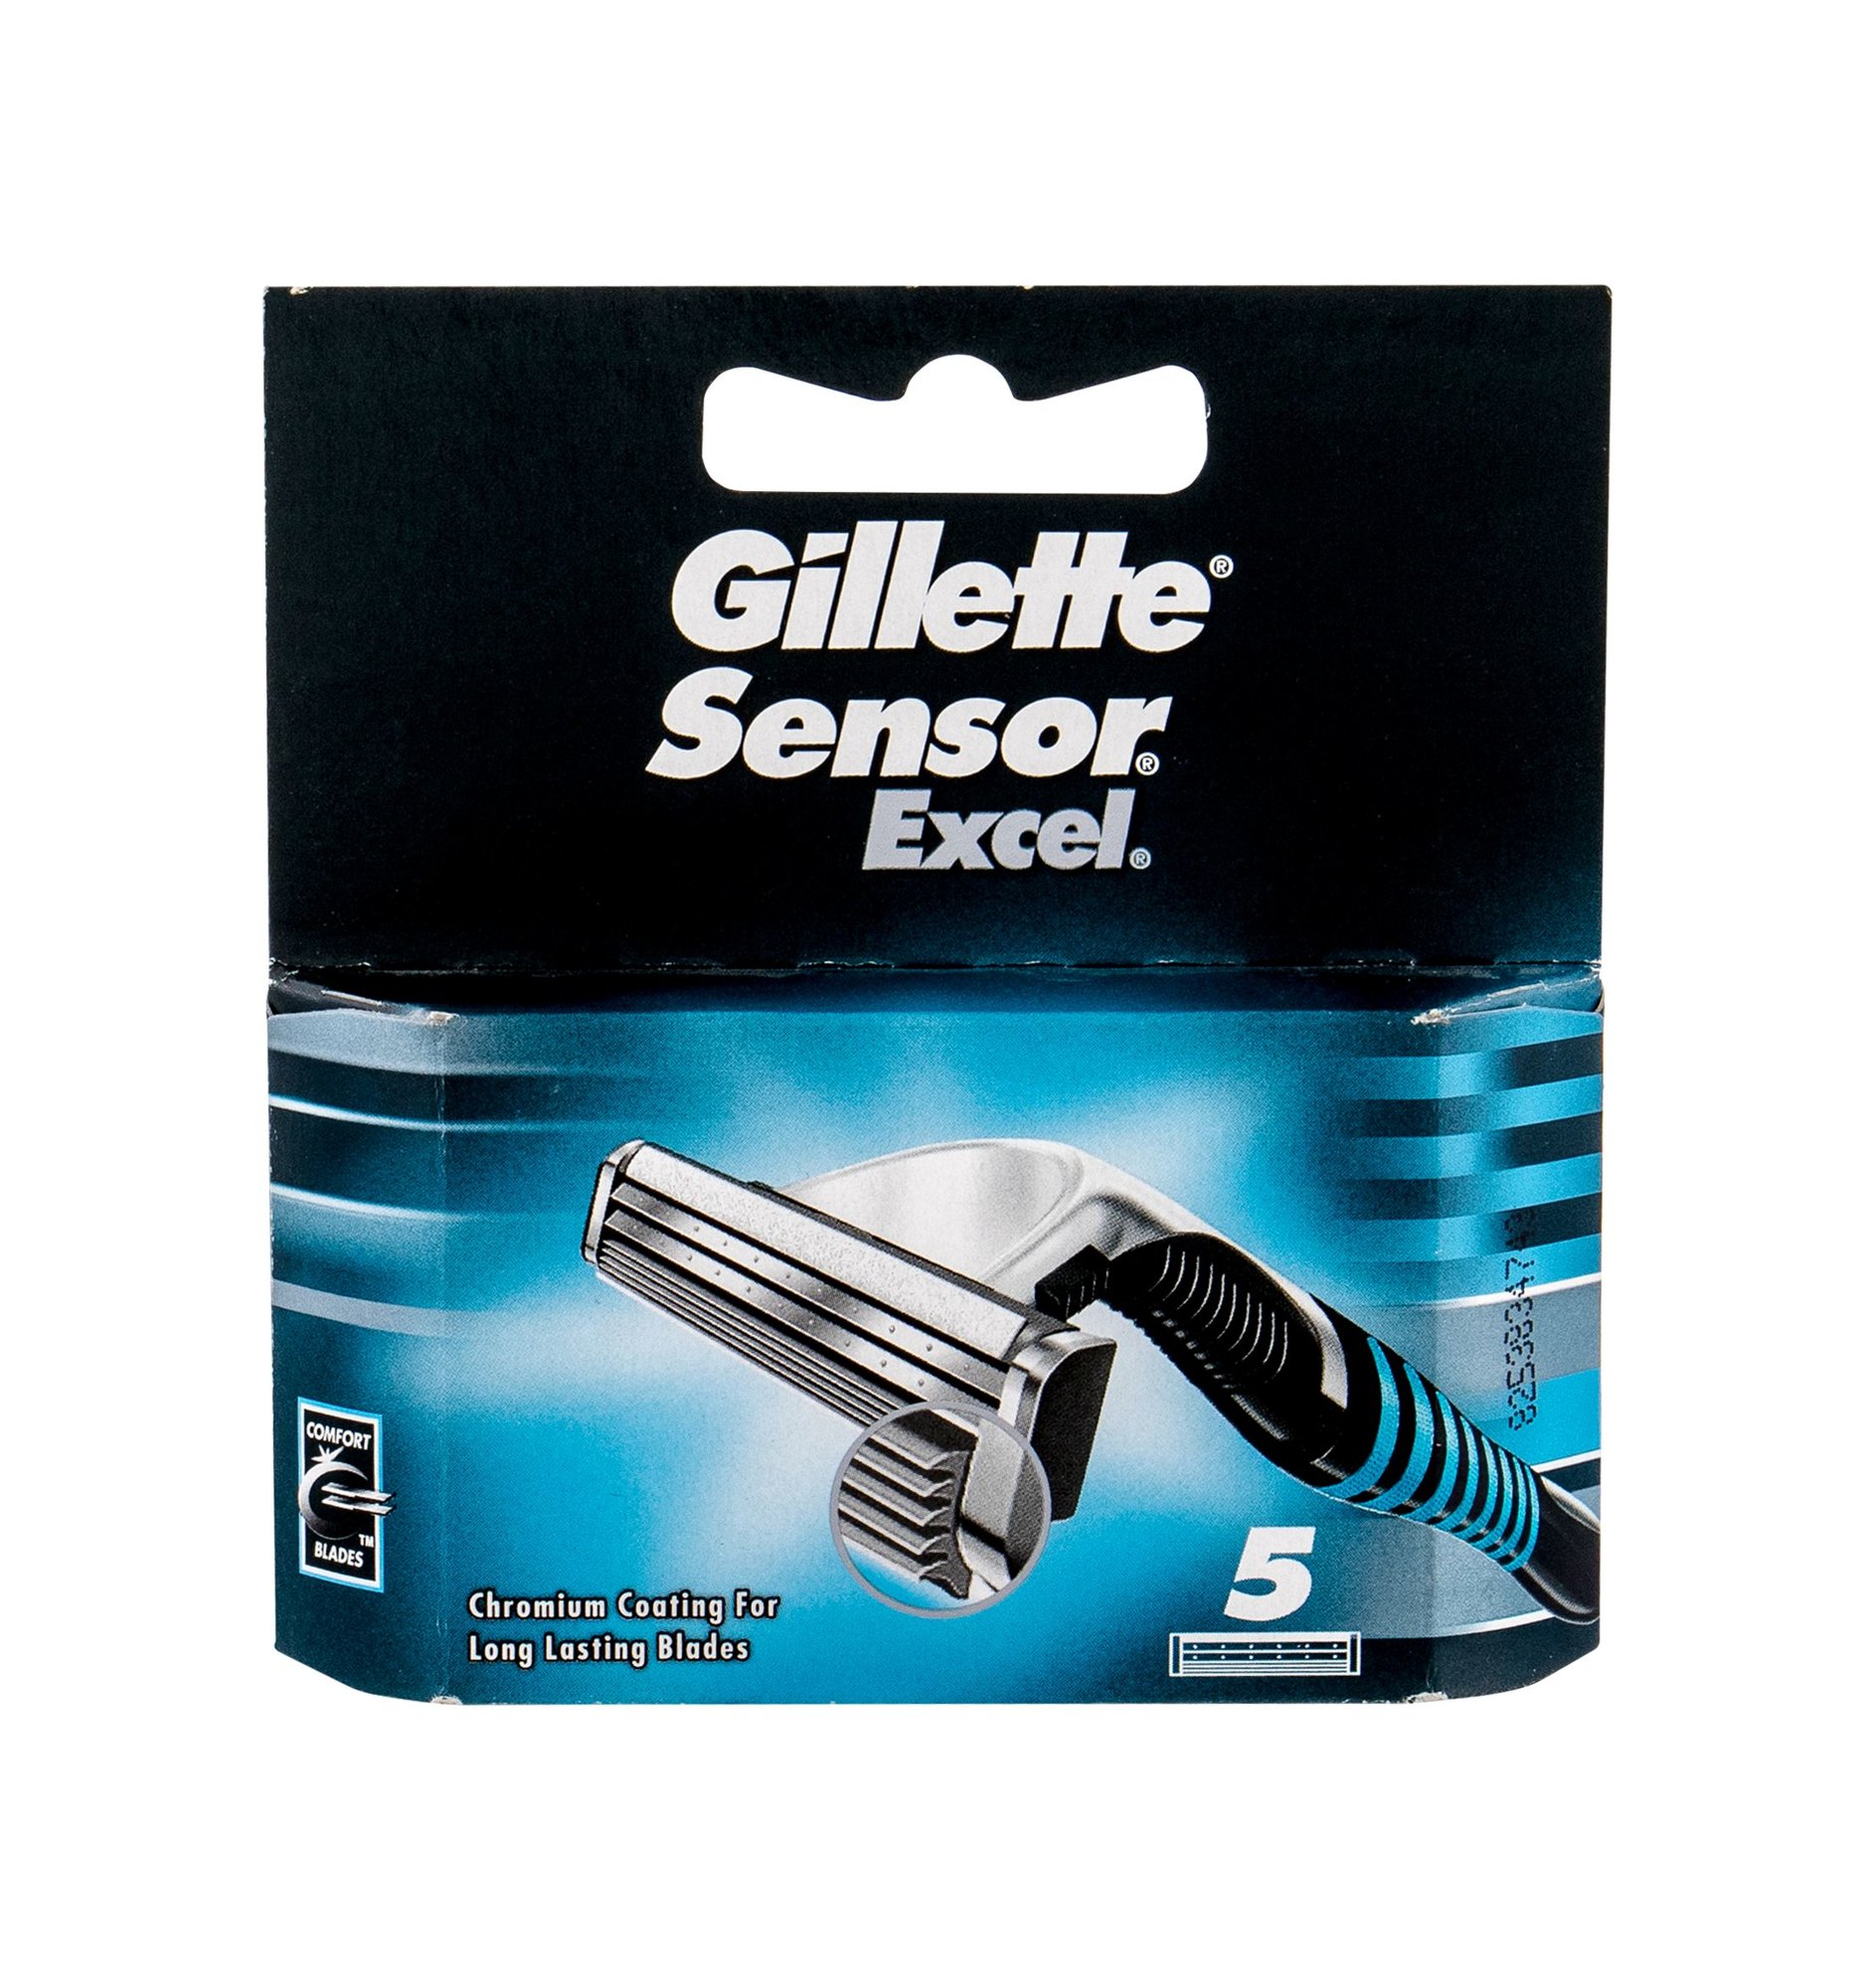 Gillette Sensor Excel skustuvo galvutė